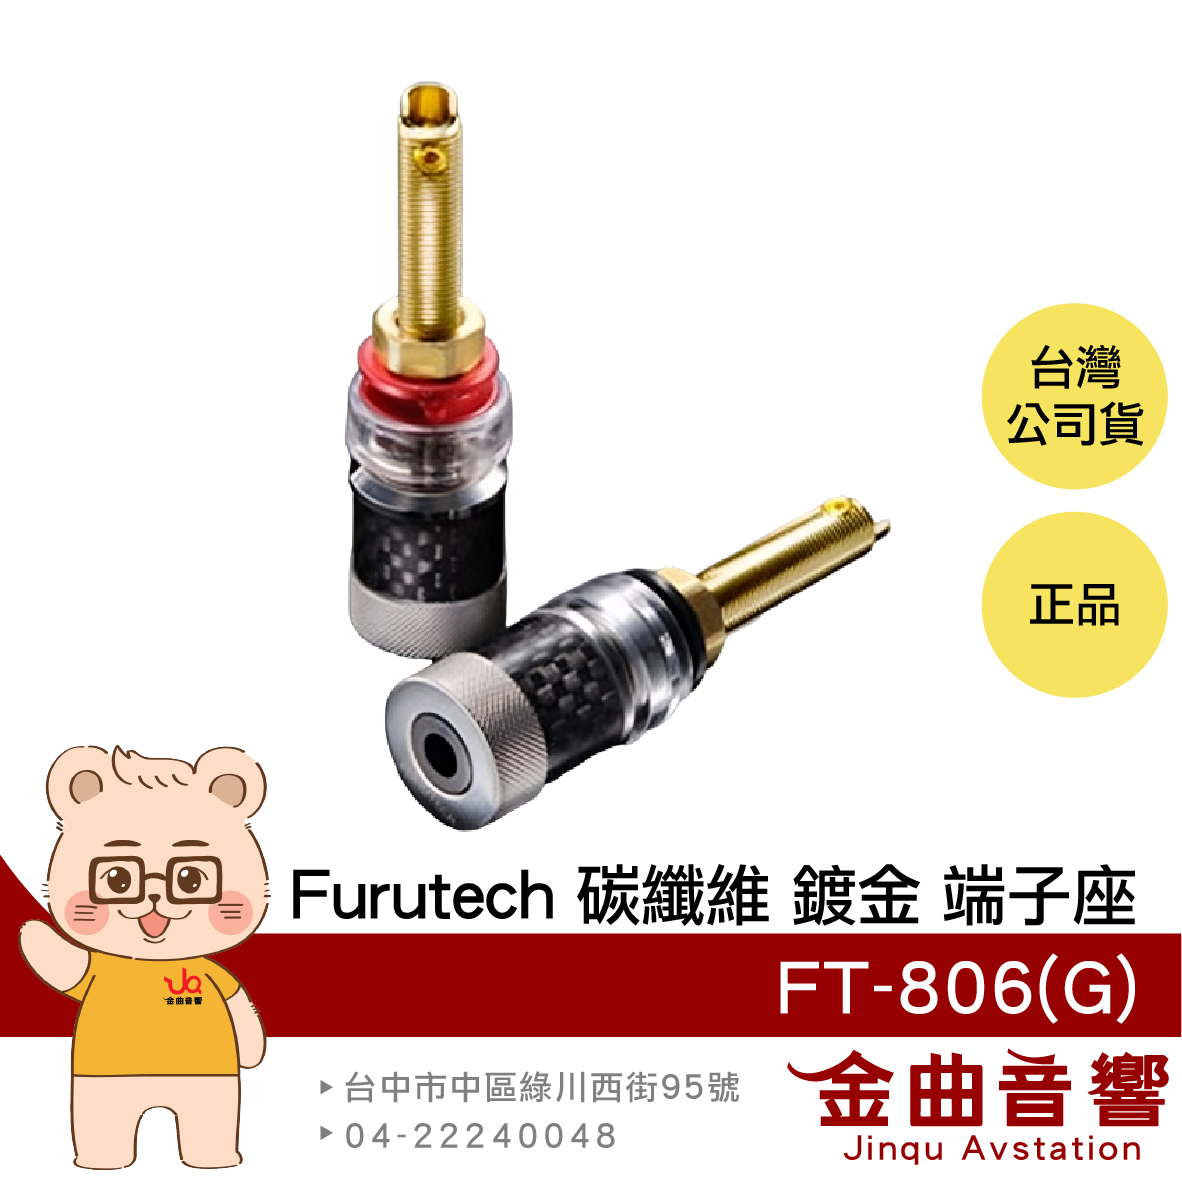 FURUTECH 古河 FT-806(G) 鍍金 碳纖維 音響 端子座 | 金曲音響